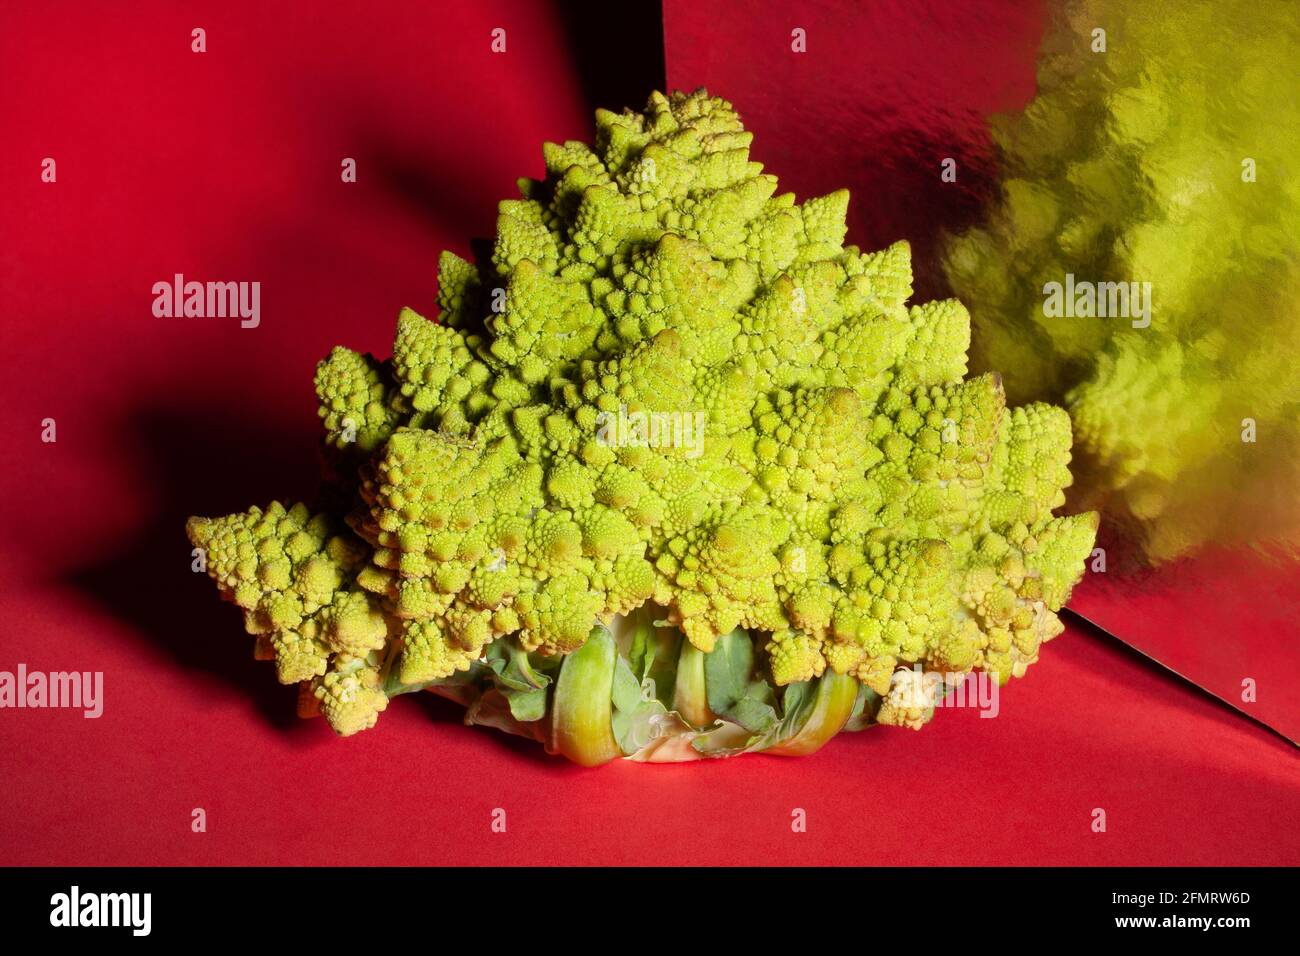 mirrored romanesco broccoli on red background Stock Photo